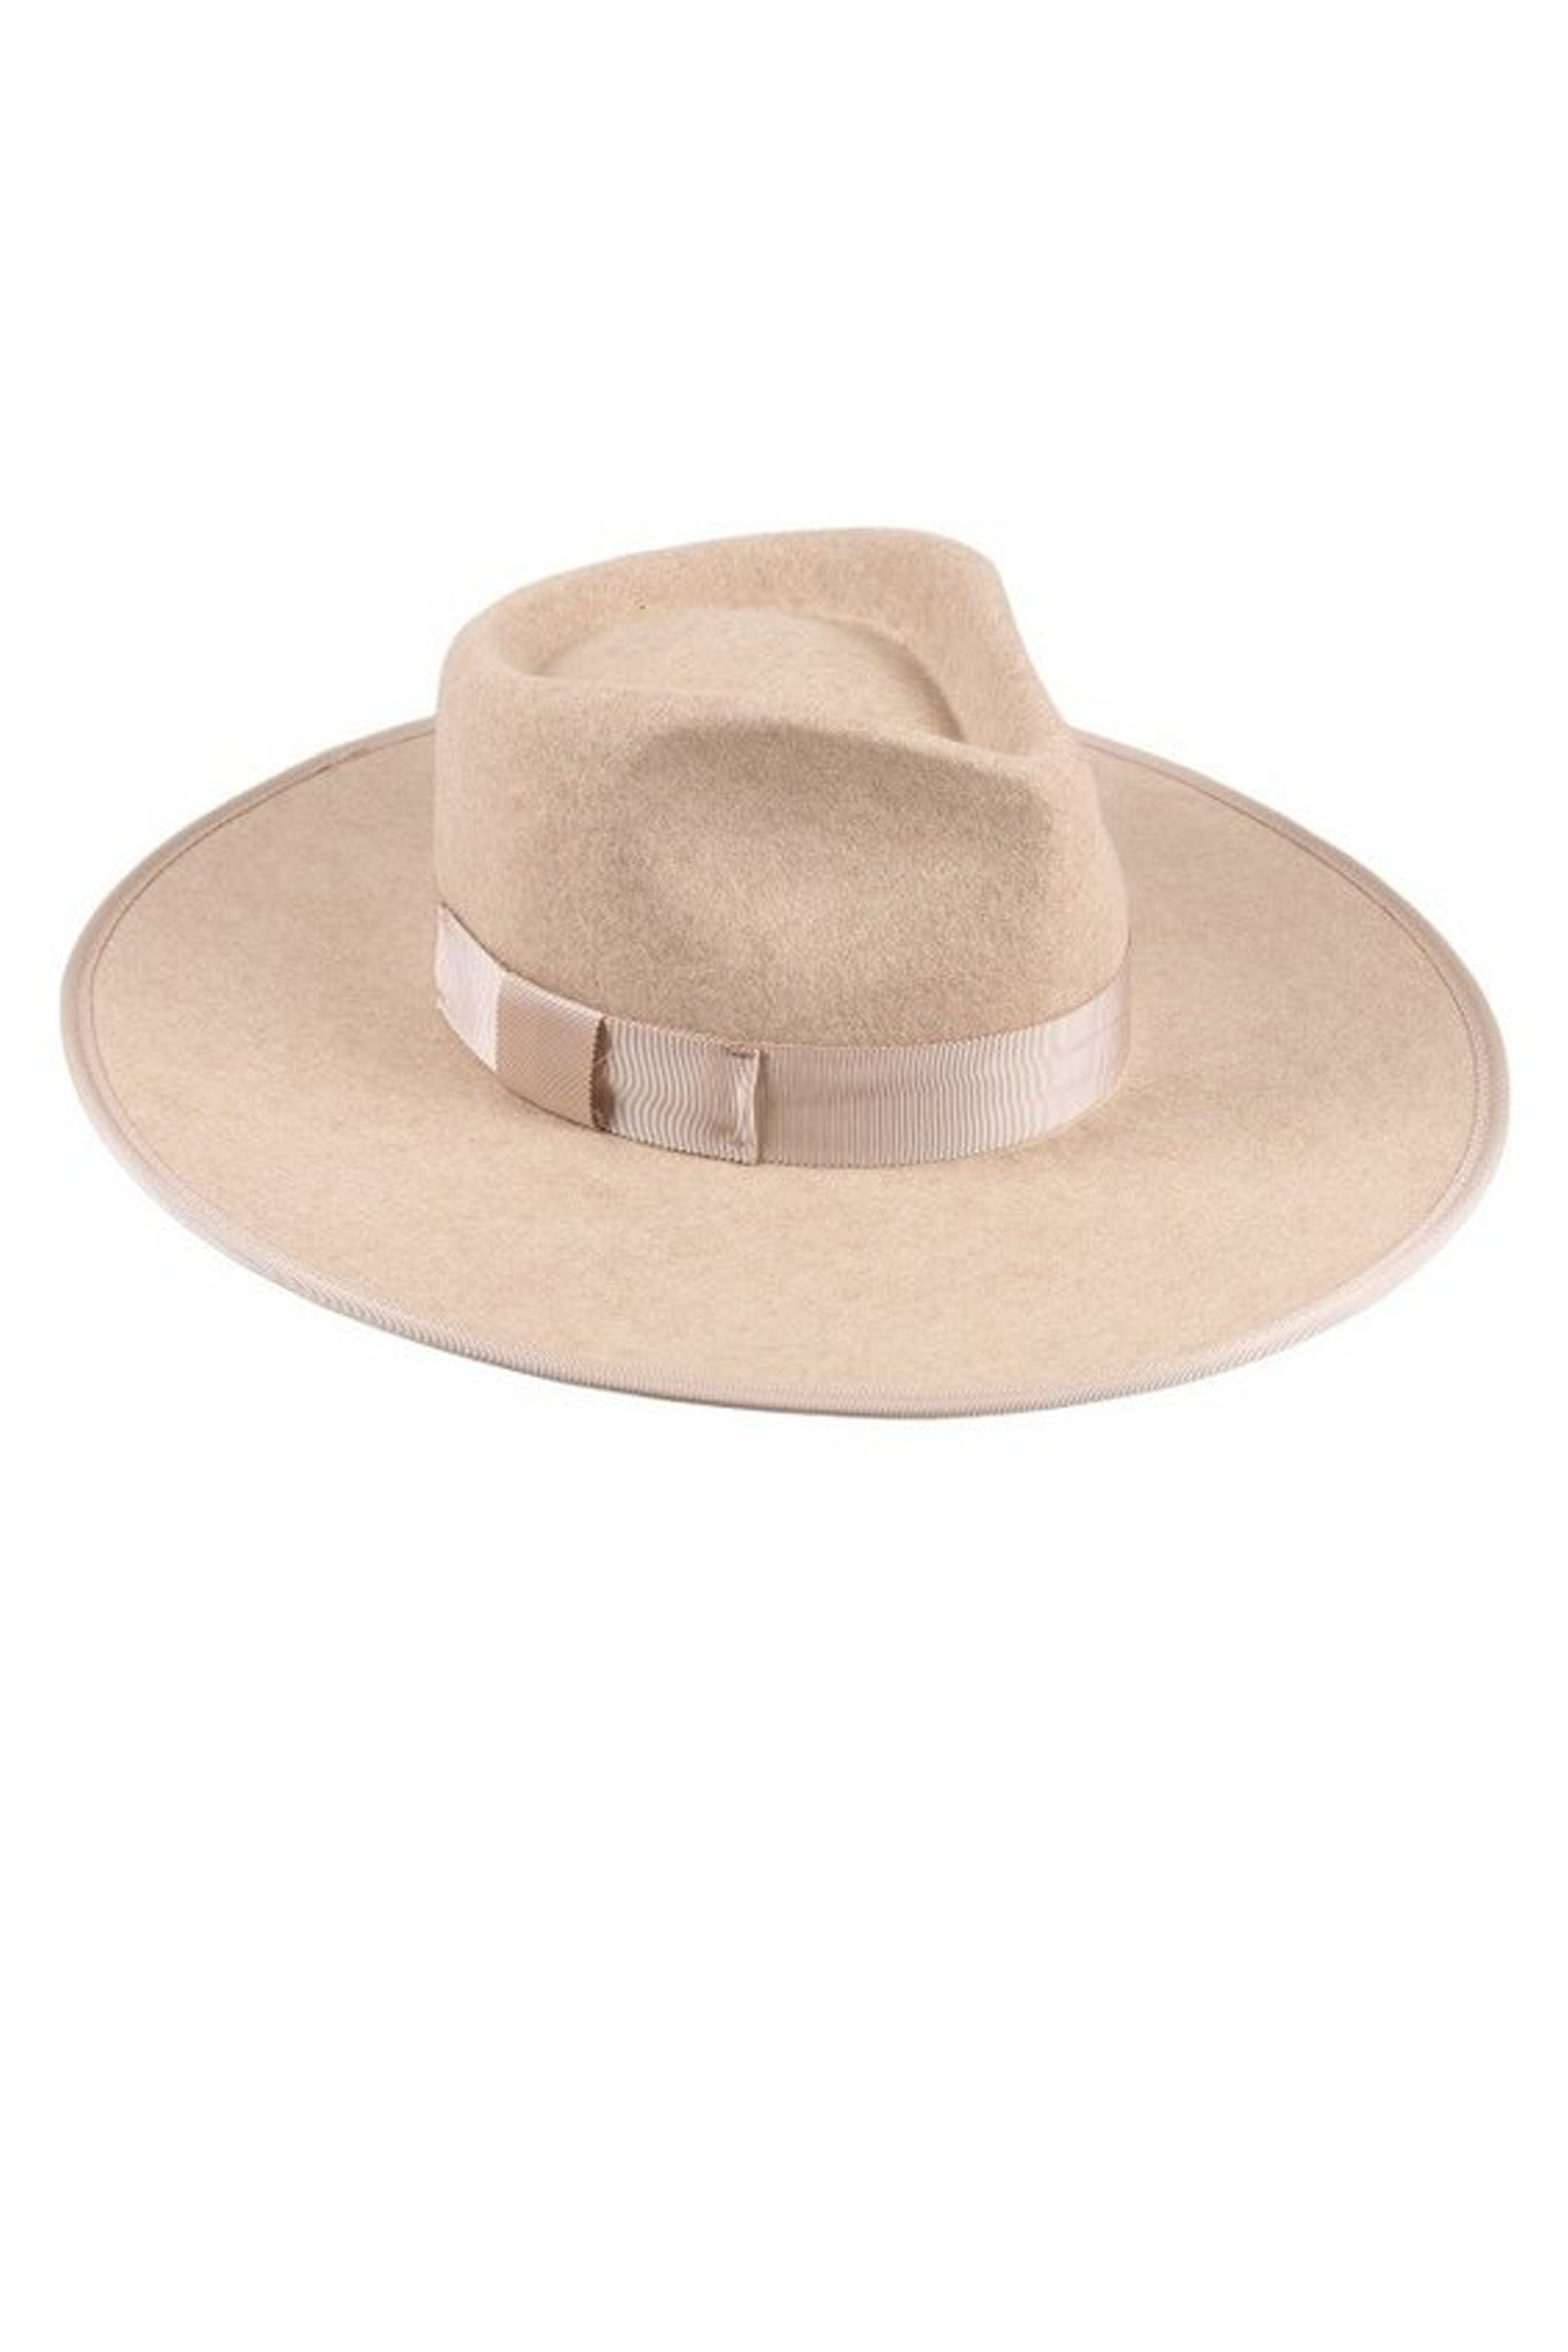 'Ardmore Caves' Panama Wool Hat